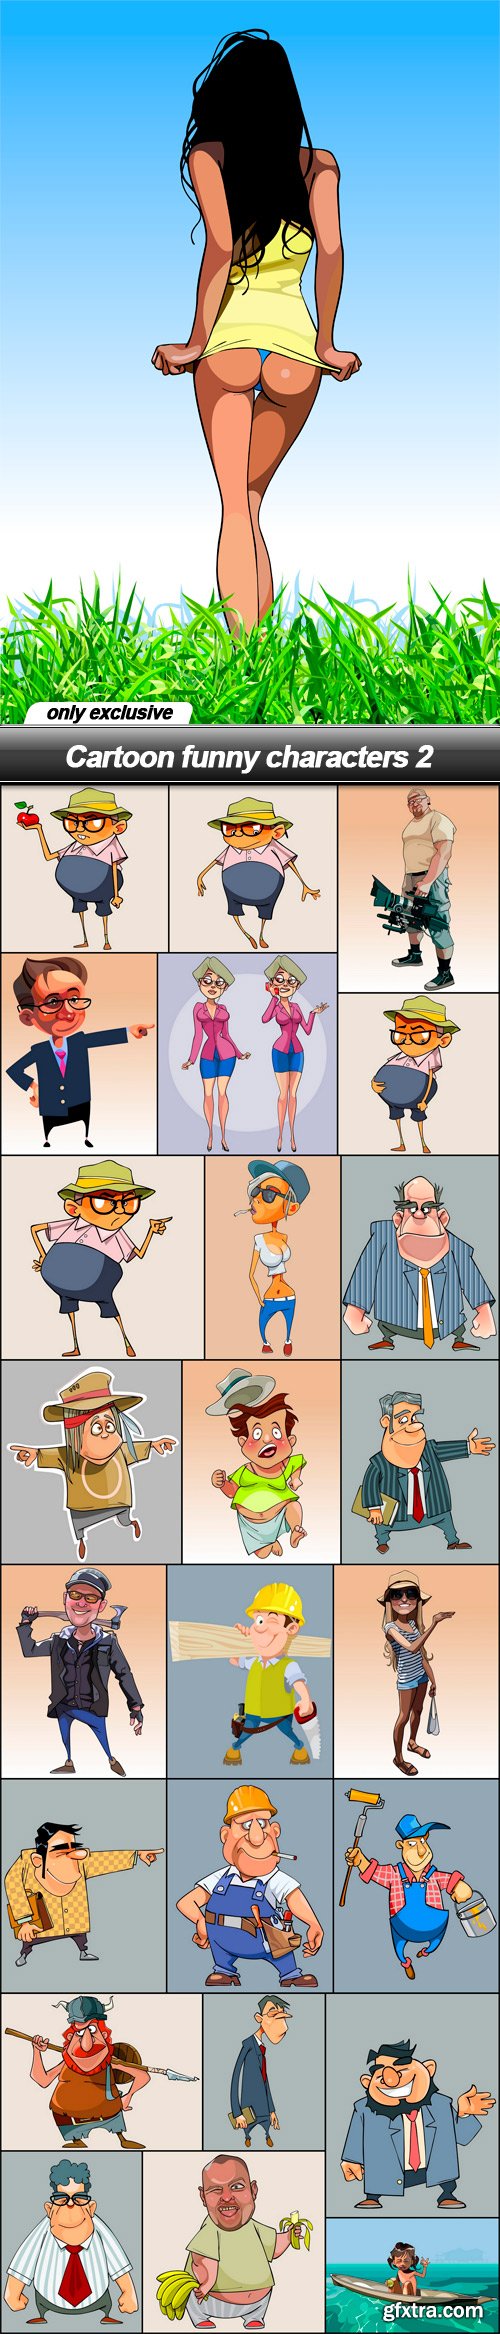 Cartoon funny characters 2 - 25 EPS